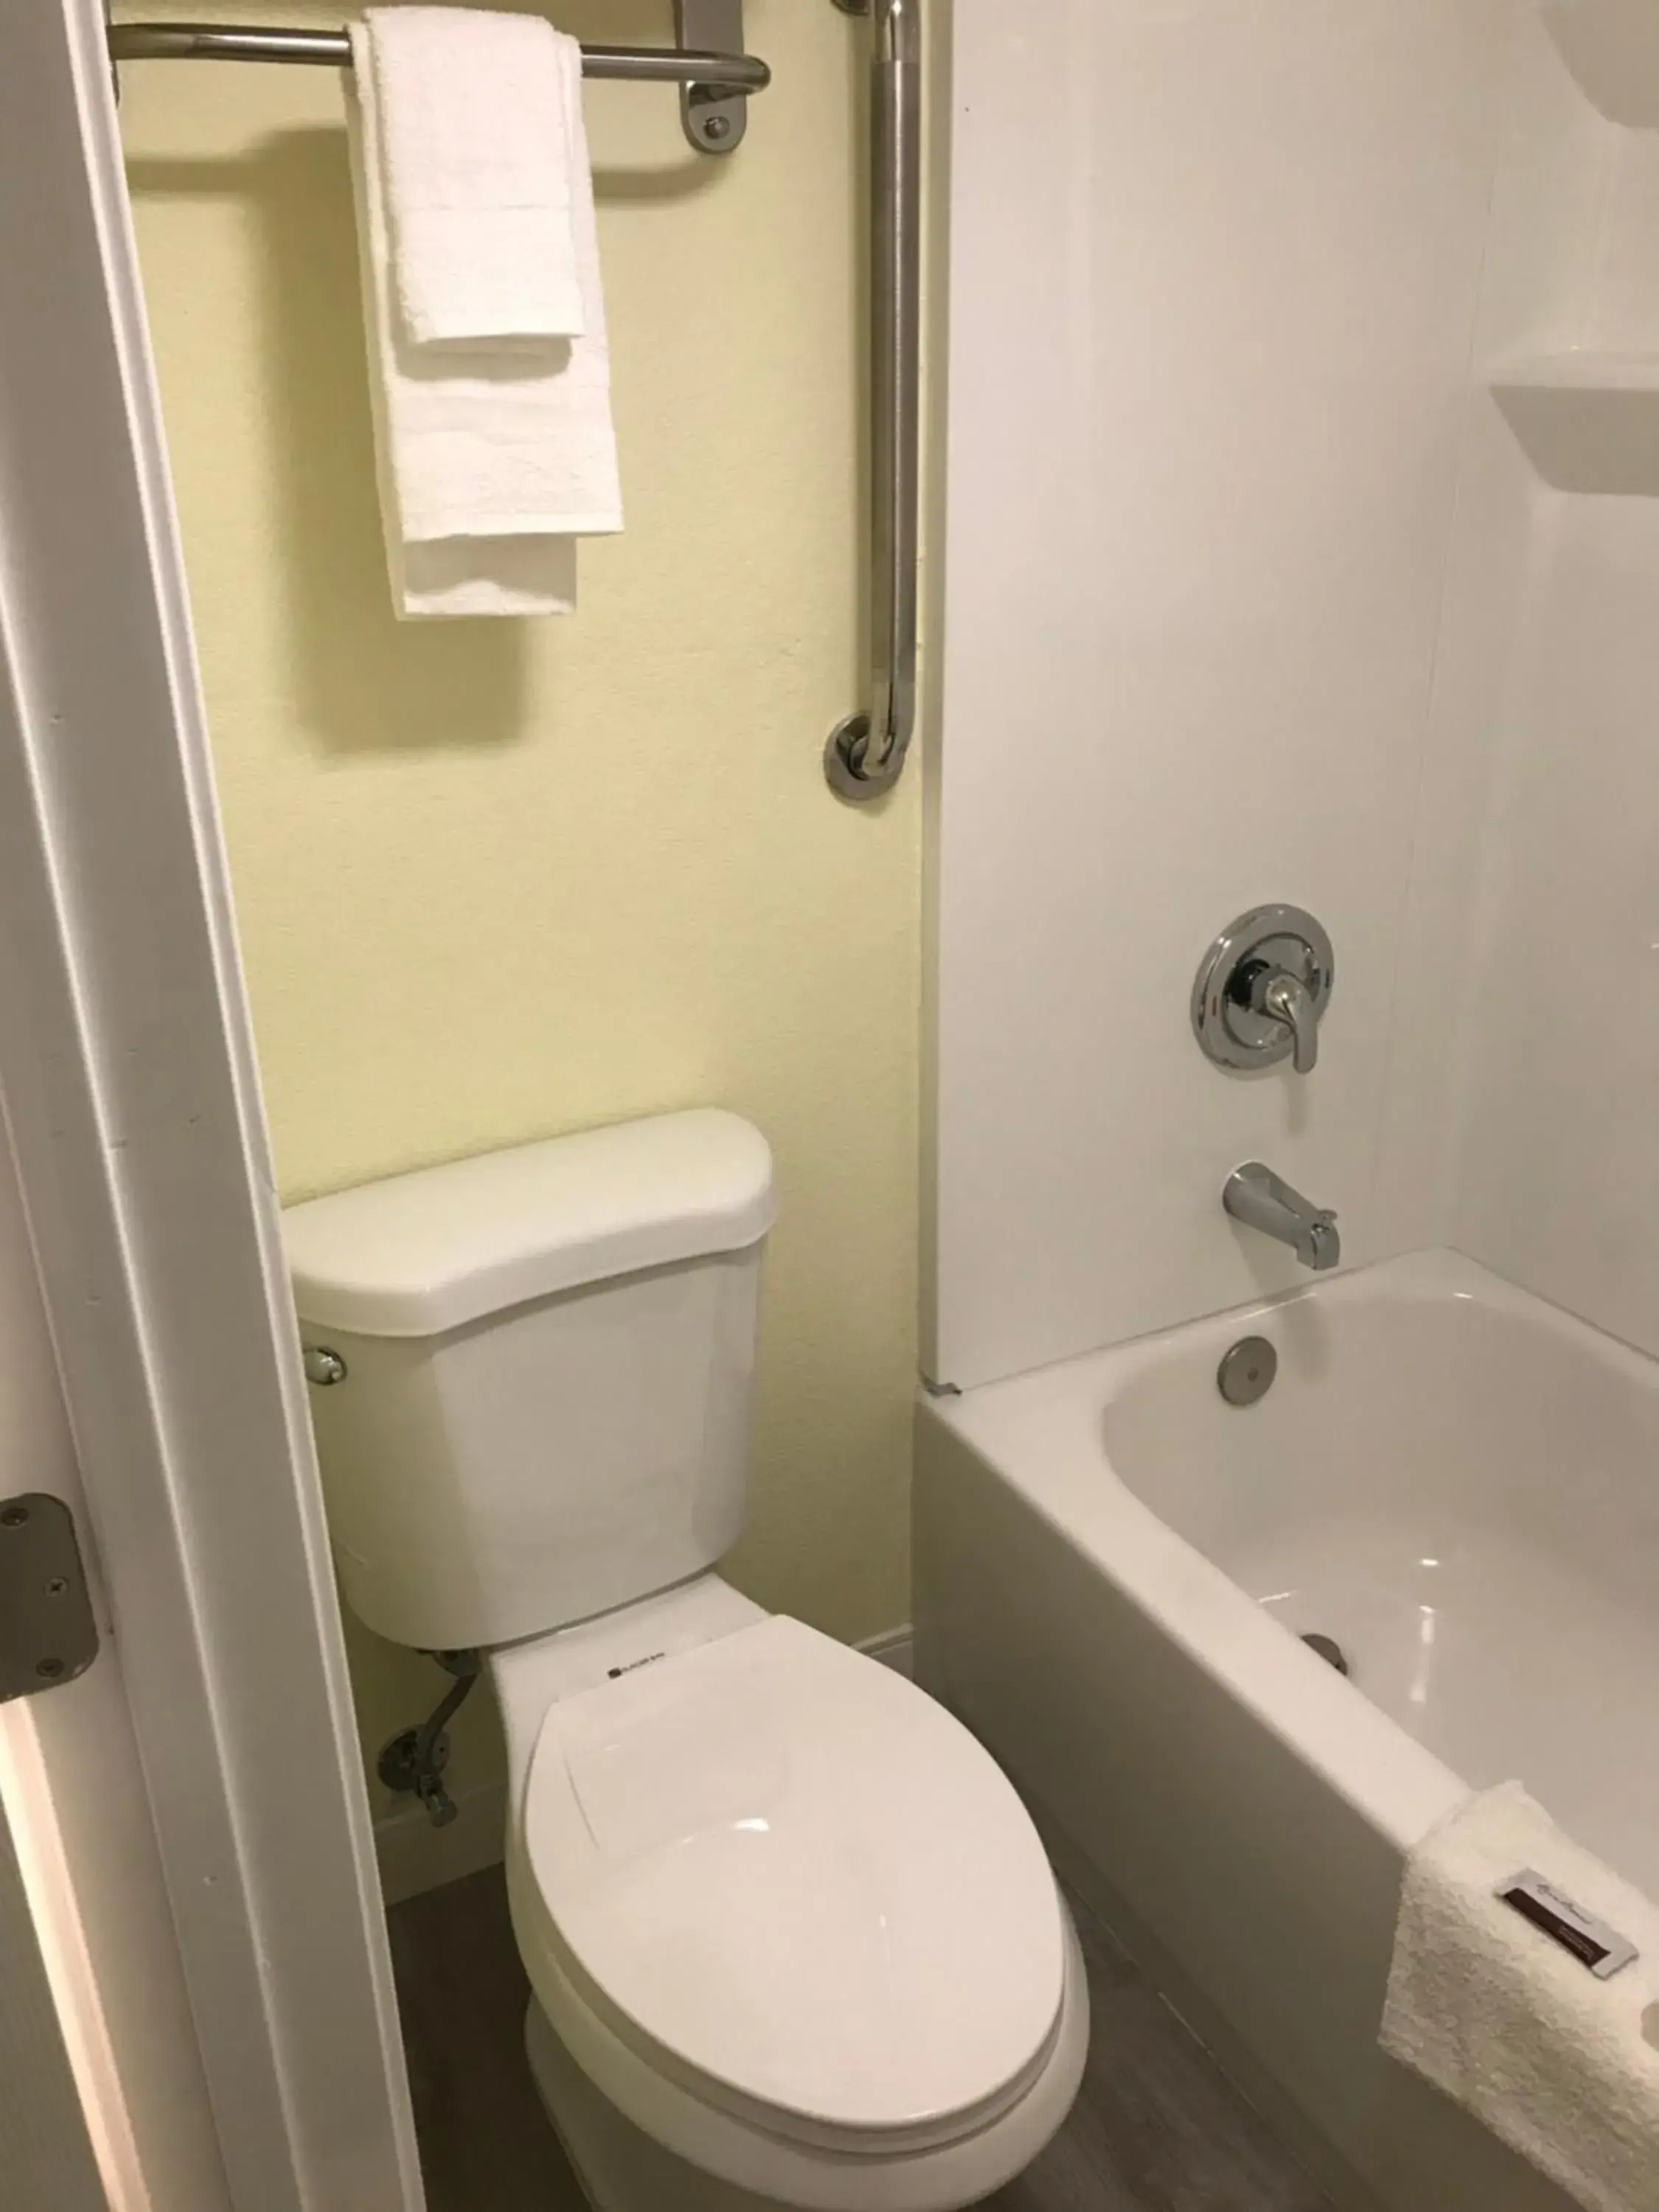 Bathroom in Gila Bend Lodge